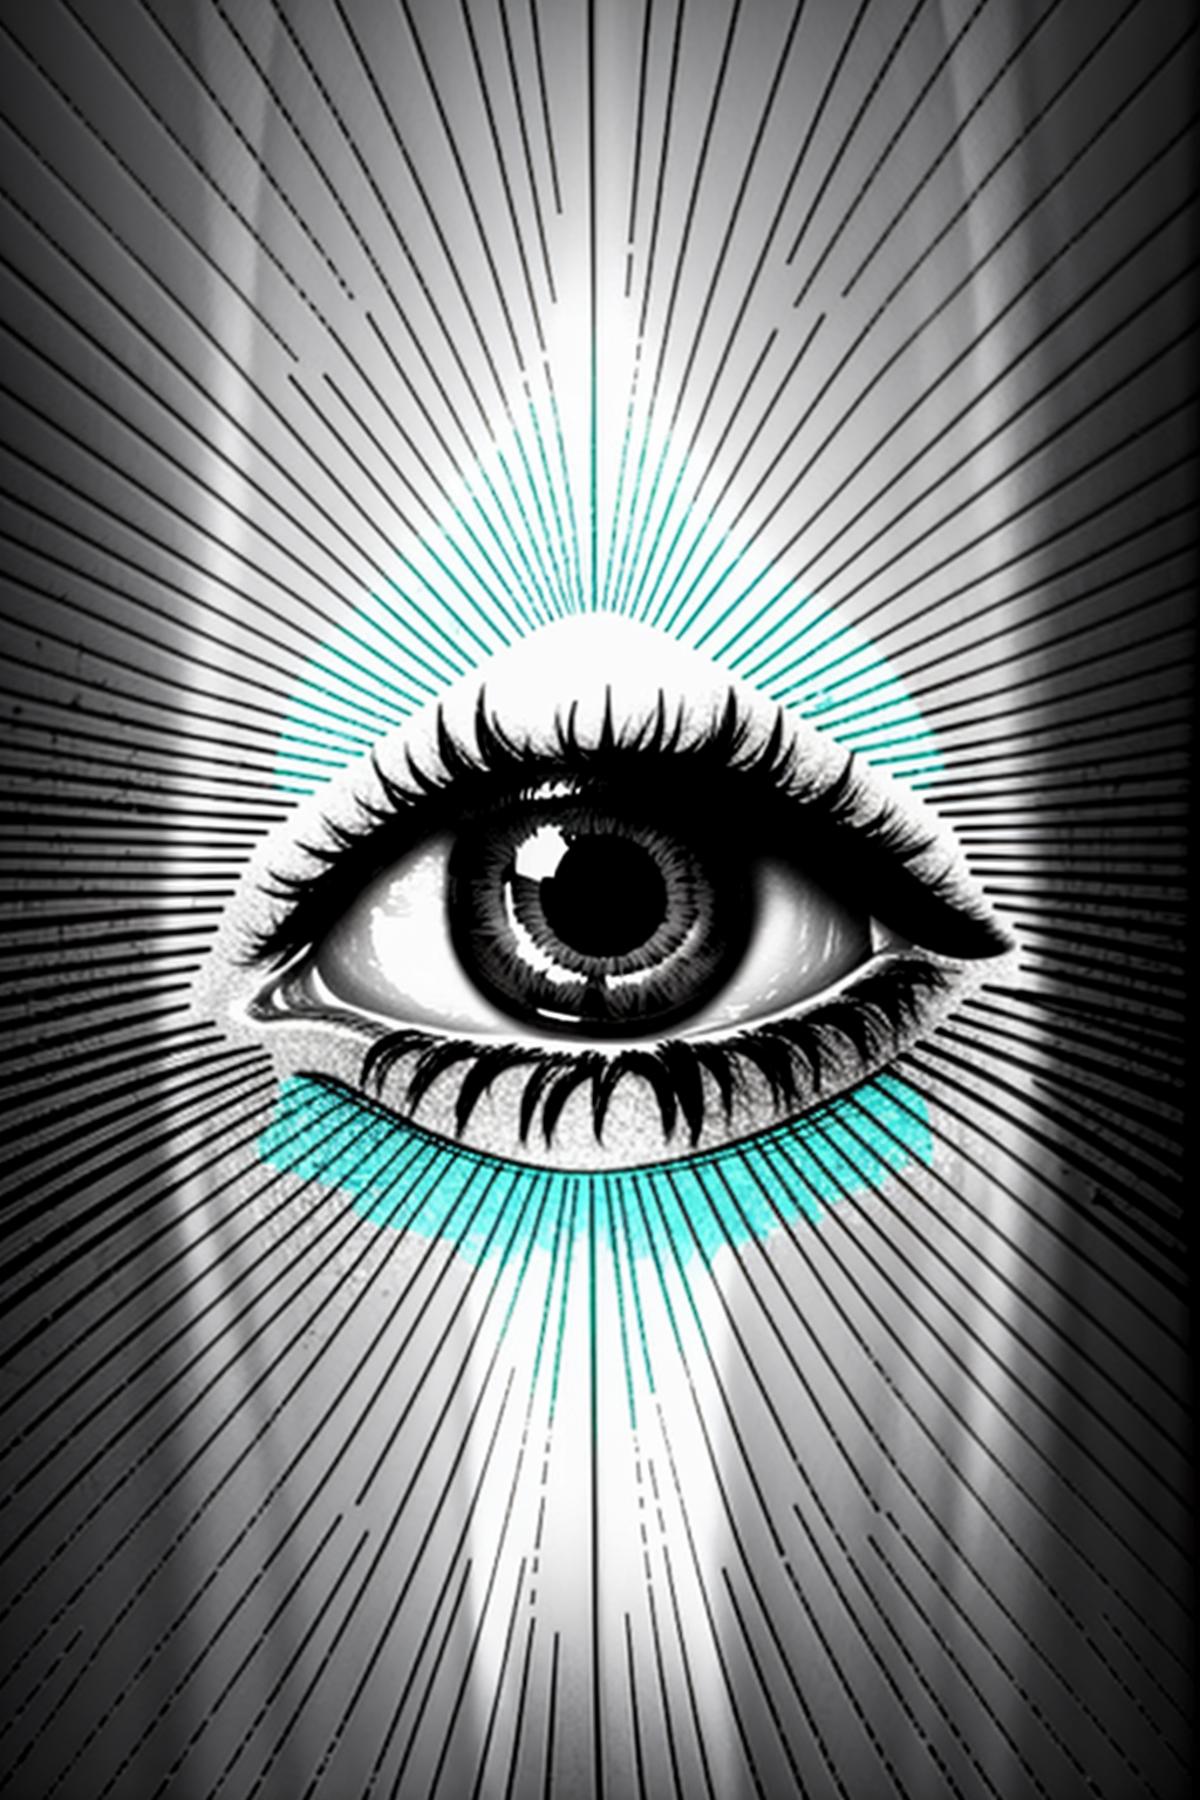 The Eye image by Ciro_Negrogni